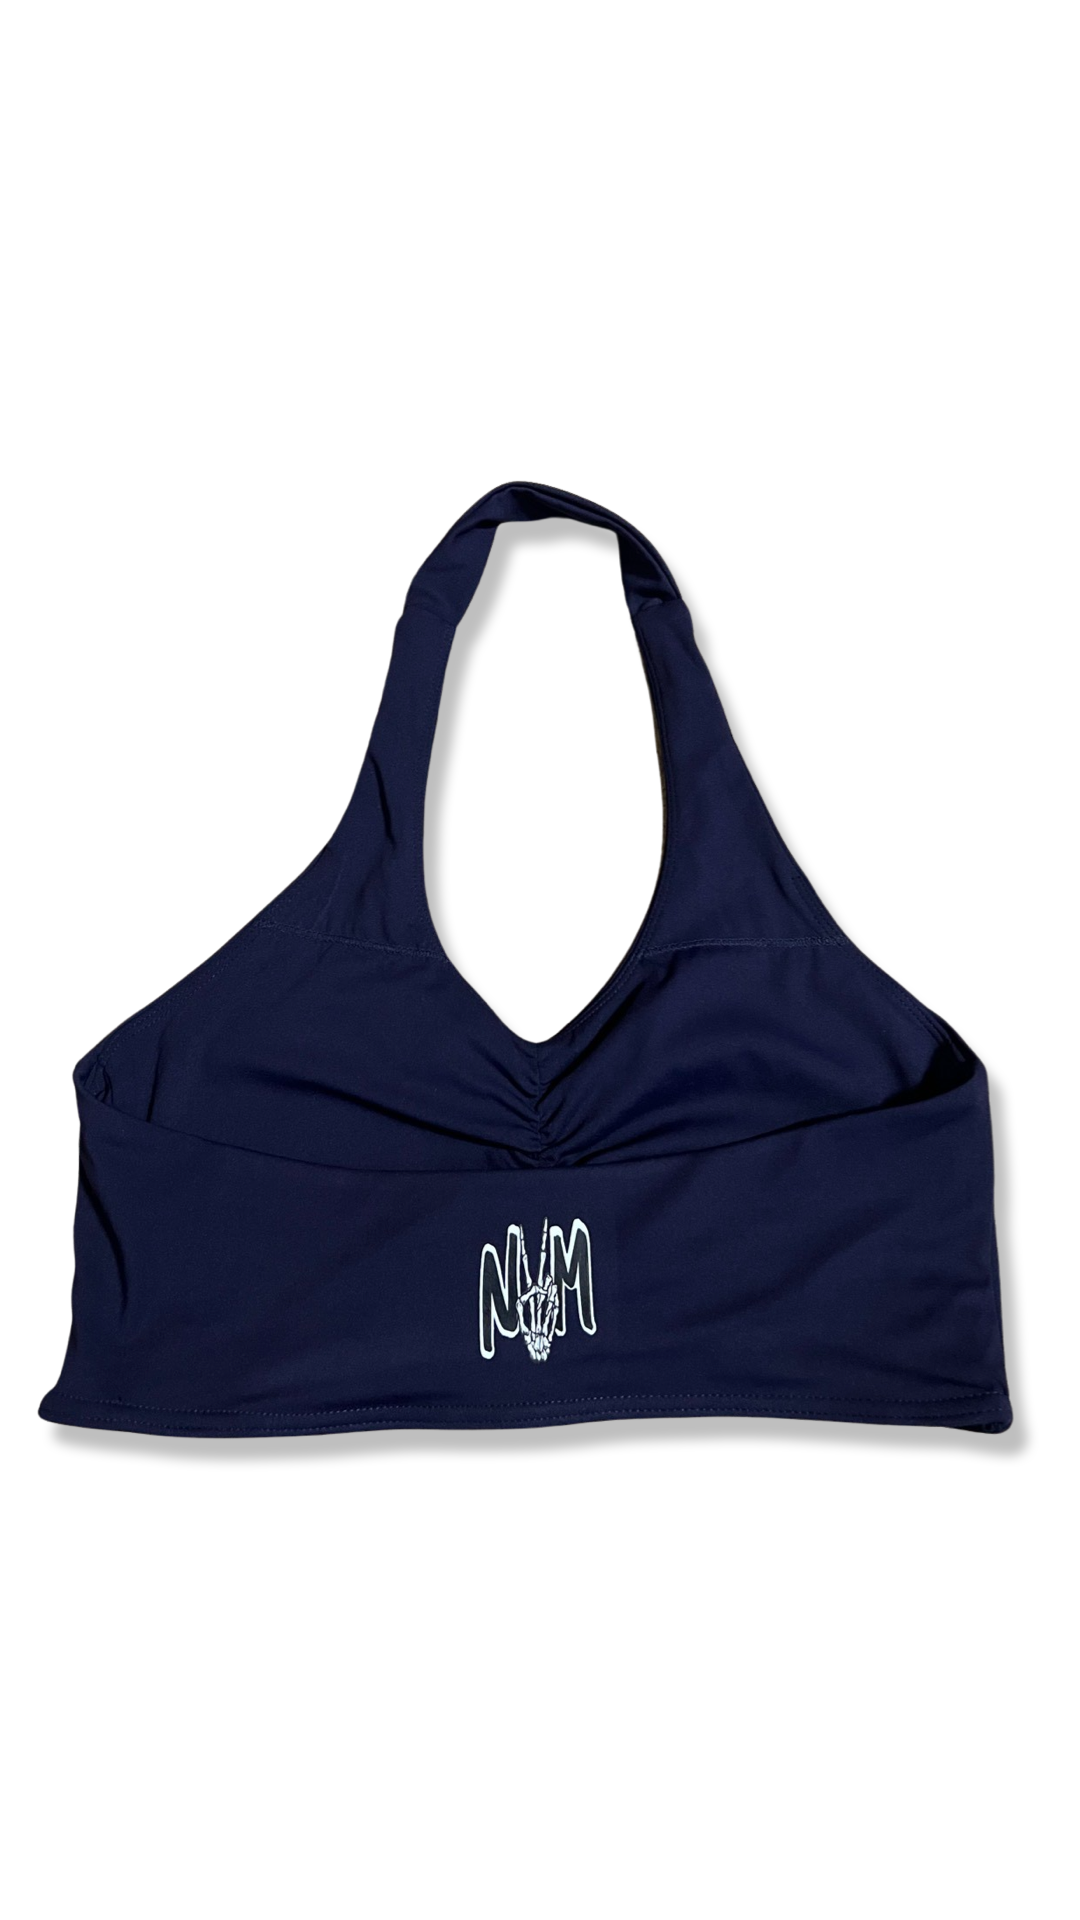 (Szn2) (Navy blue) halter sport bra